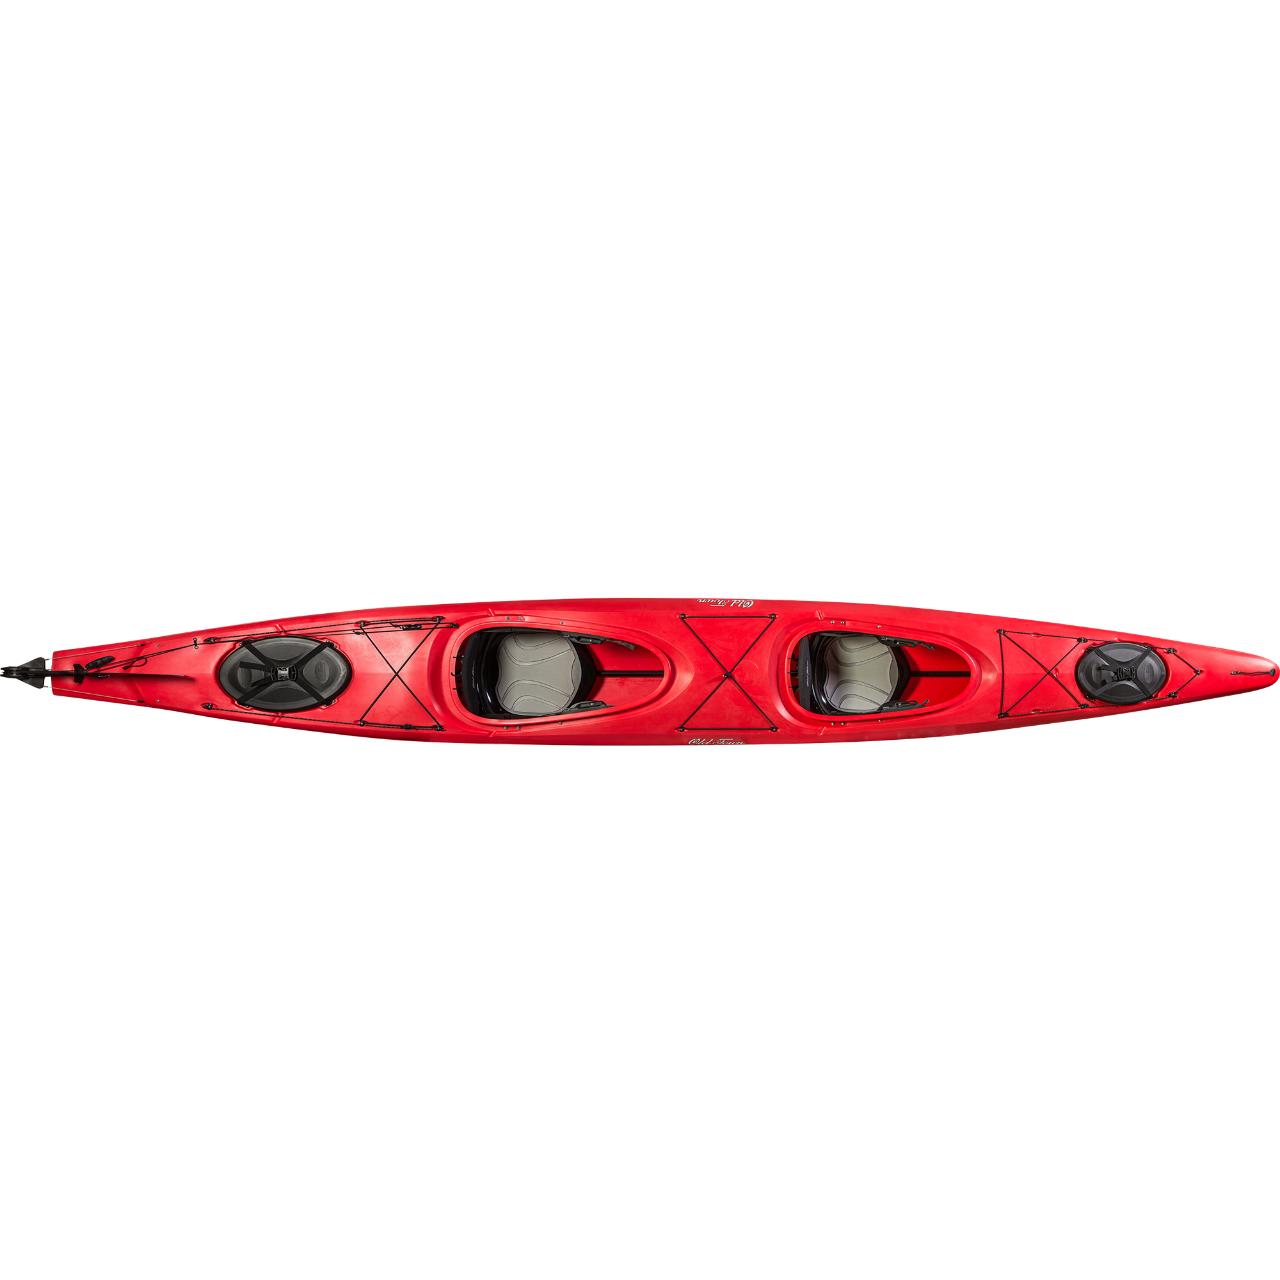 Ocean Kayak - Tandem - Necky Looksha 18 Includes Sprayskirts, Paddles, PFDs, 1 Throwbag, 2 Bilge Pumps